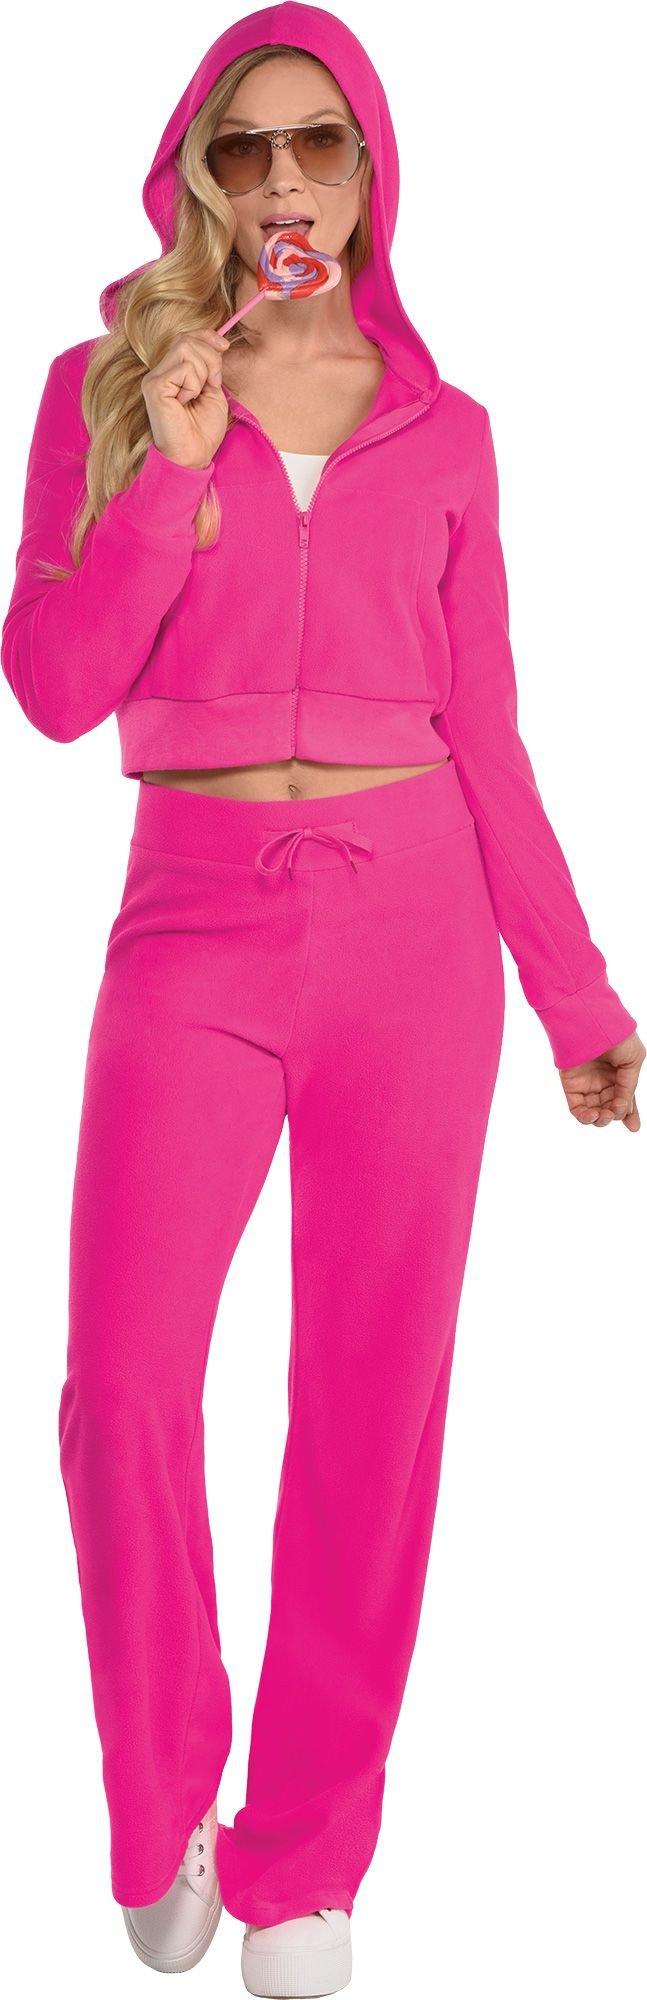 Juicy Couture Big Girls Baby Pink Velour Sweatsuit Set